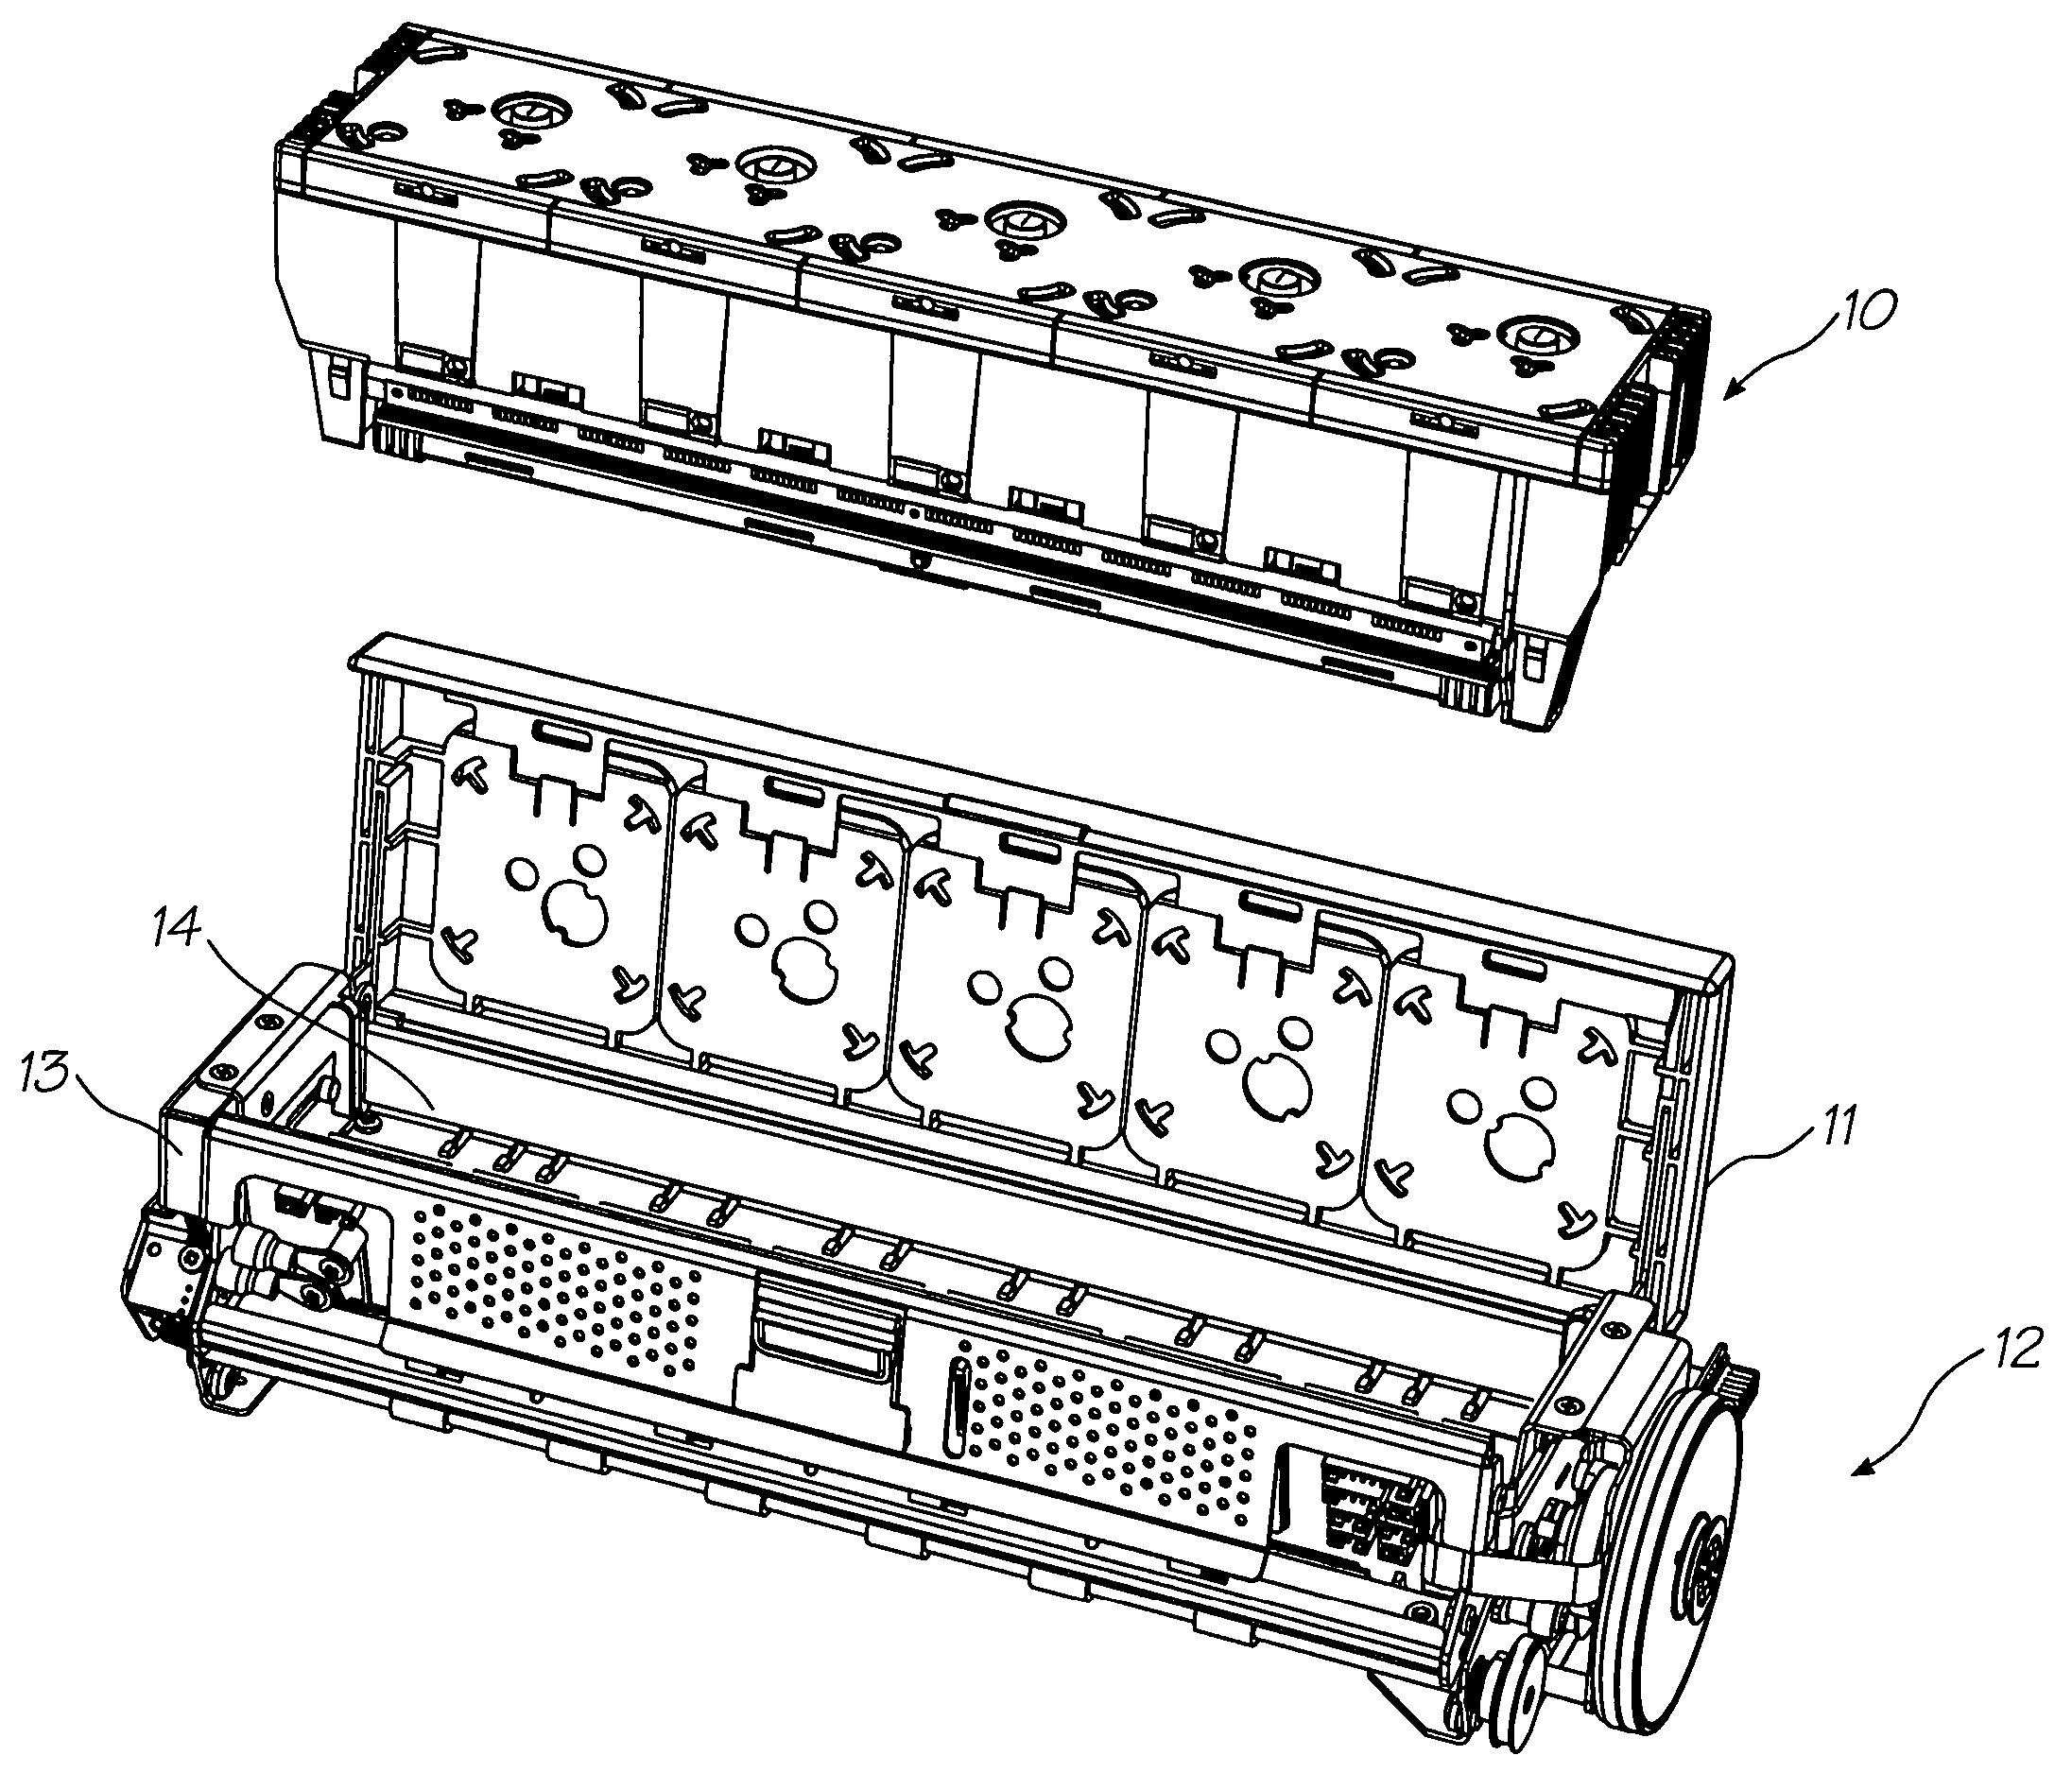 Cartridge unit having negatively pressurized ink storage